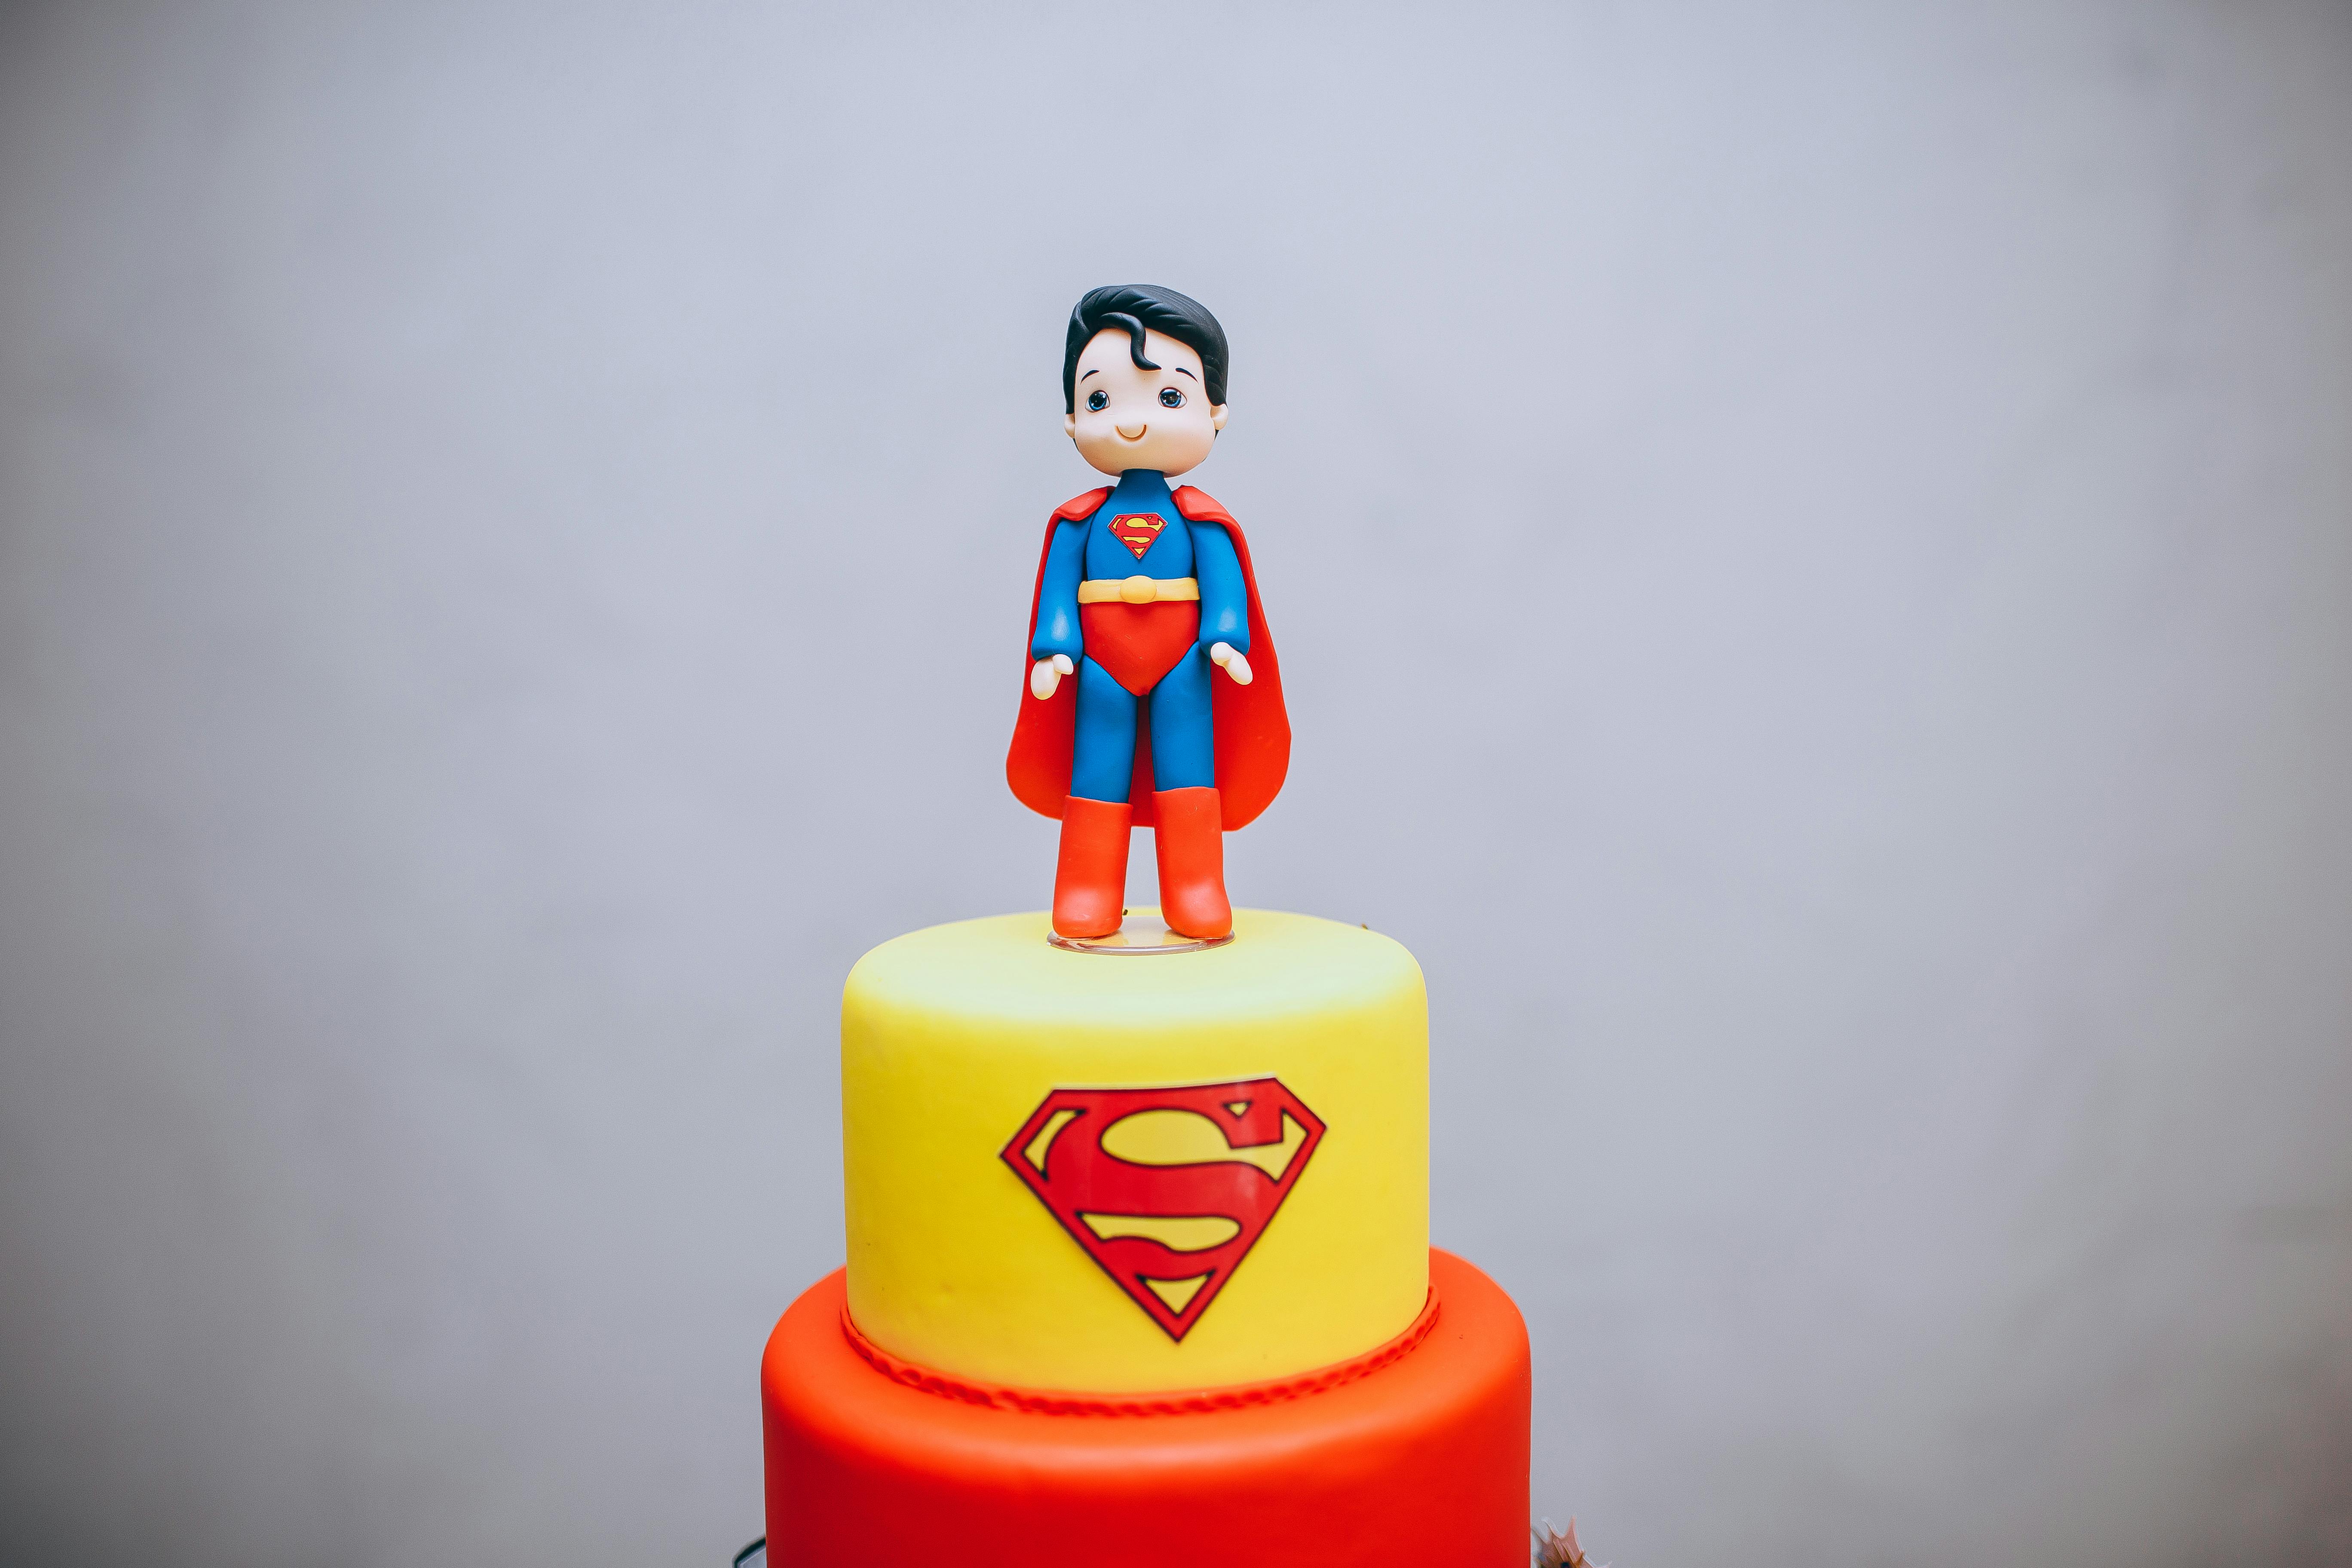 Batman vs Superman design inside Cake - video tutorial - Ashlee Marie -  real fun with real food